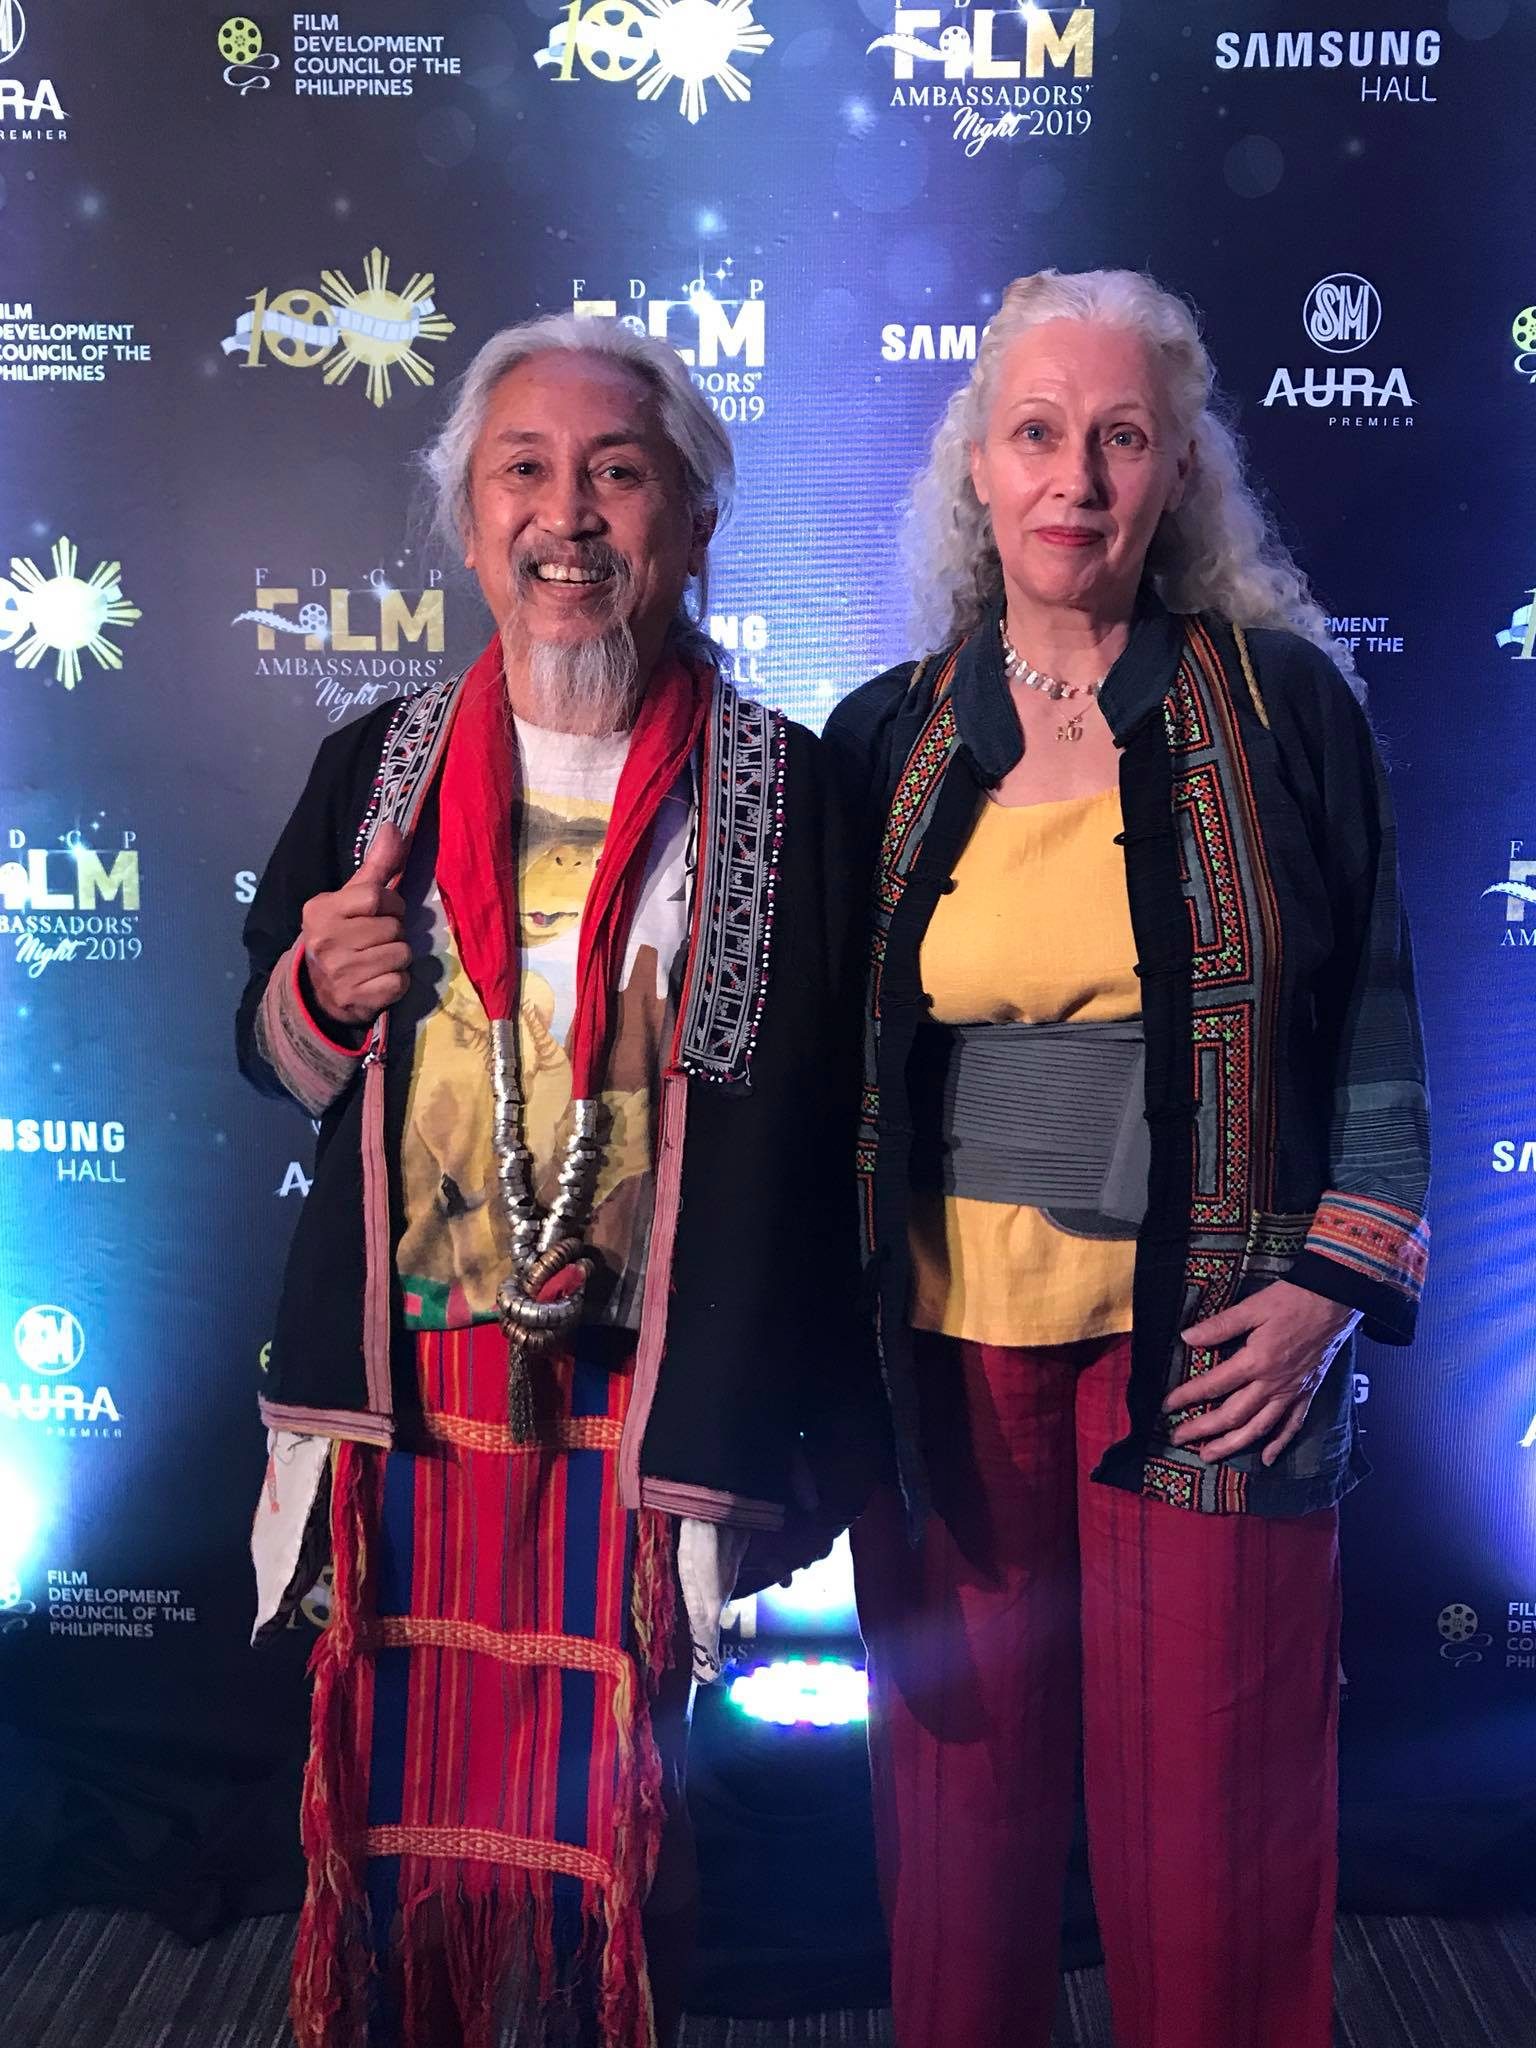 HONOREE. Filmmaker Kidlat Tahimik and his wife Katrin. 